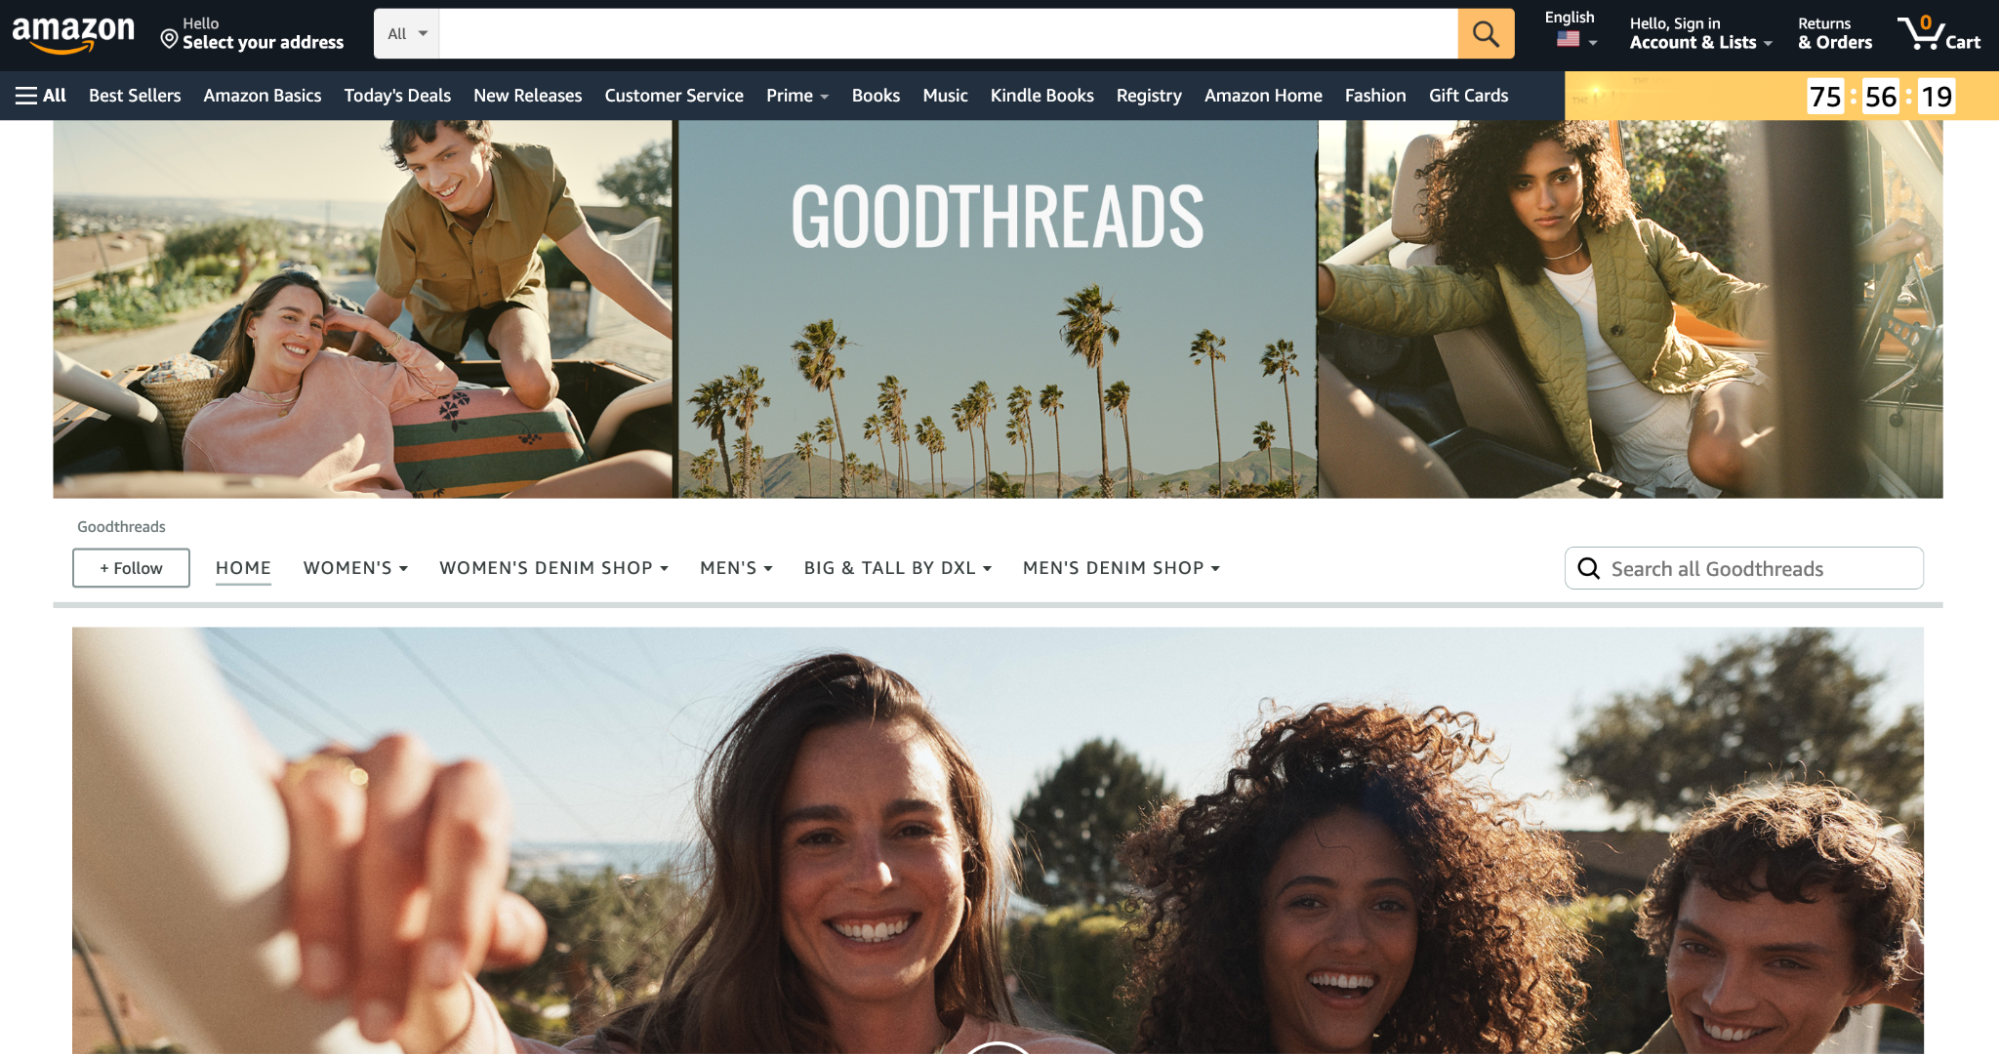 Amazon Goodthreads consumer packaged goods